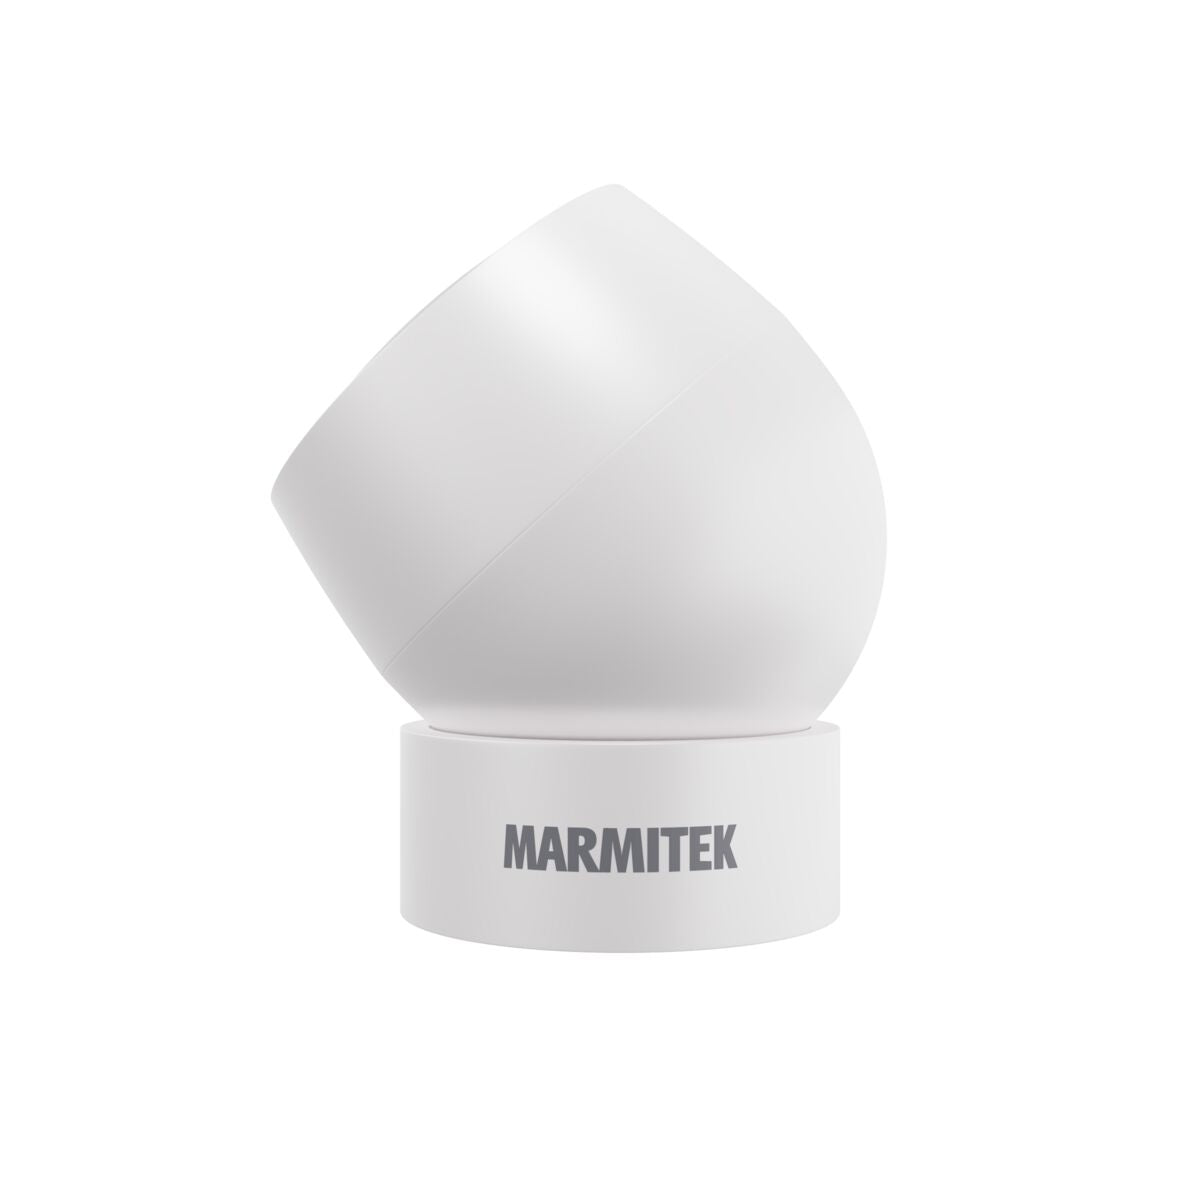 Sense ME - Zigbee motion sensor - Product Image of sensor facing left | Marmitek